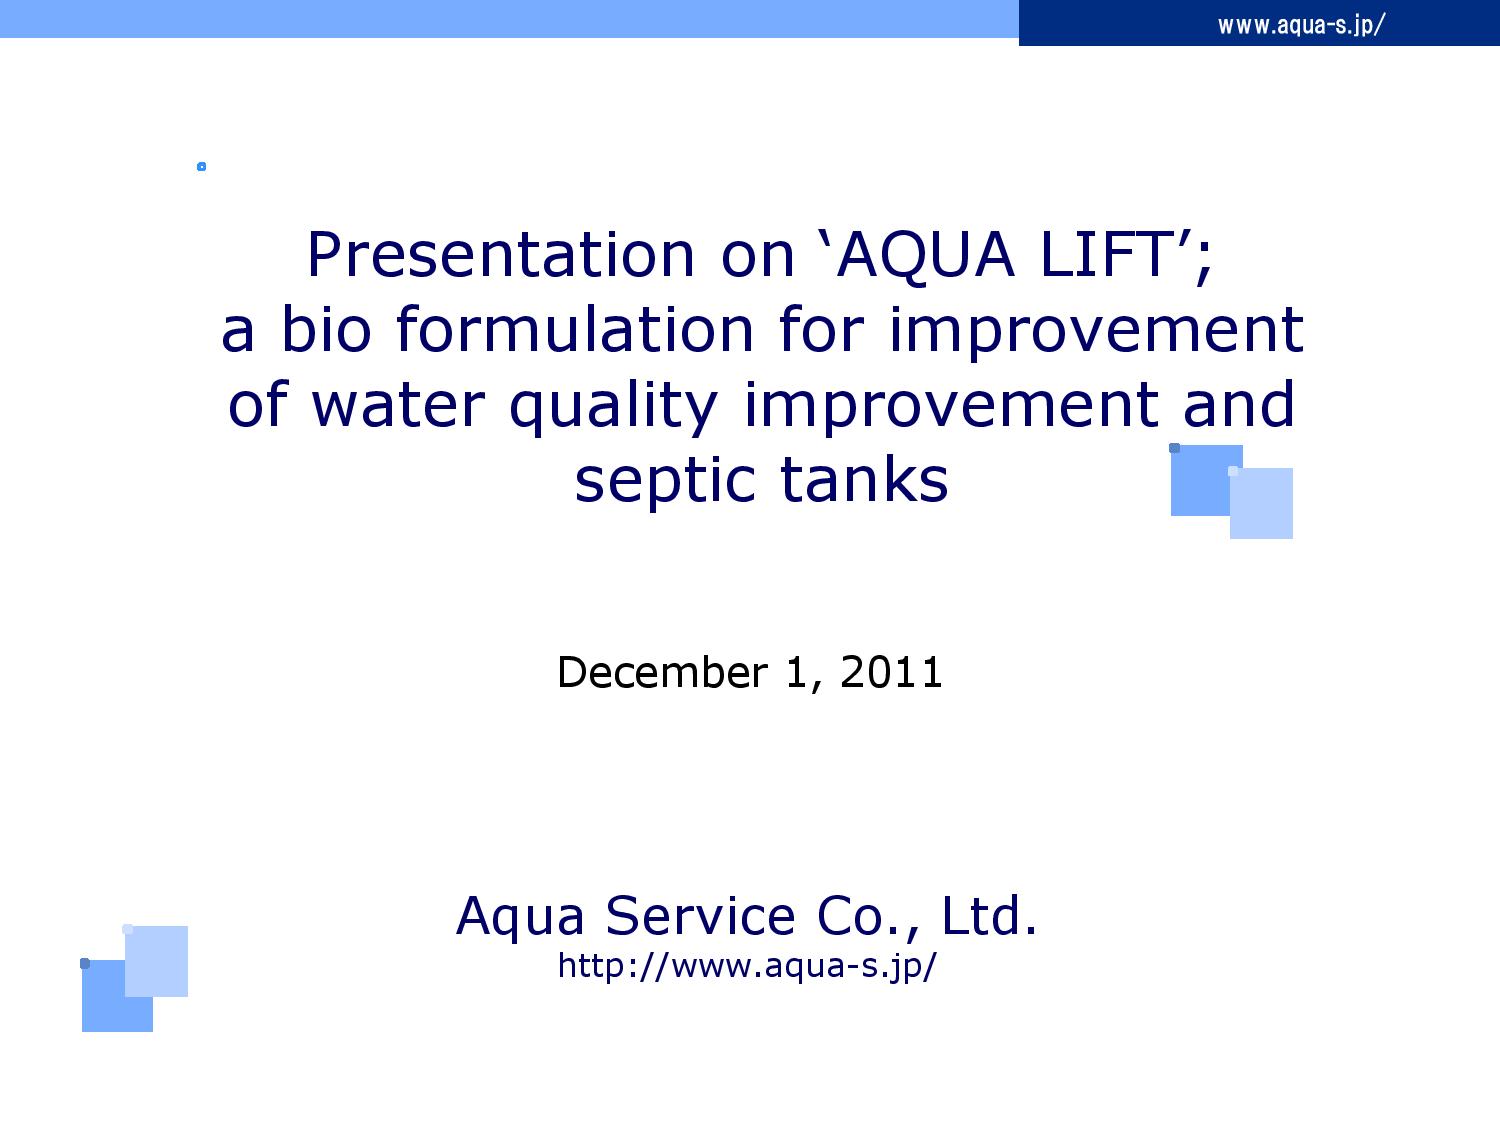 ‘AQUA LIFT’: A bio formulation for improvement of water quality improvement and septic tanks